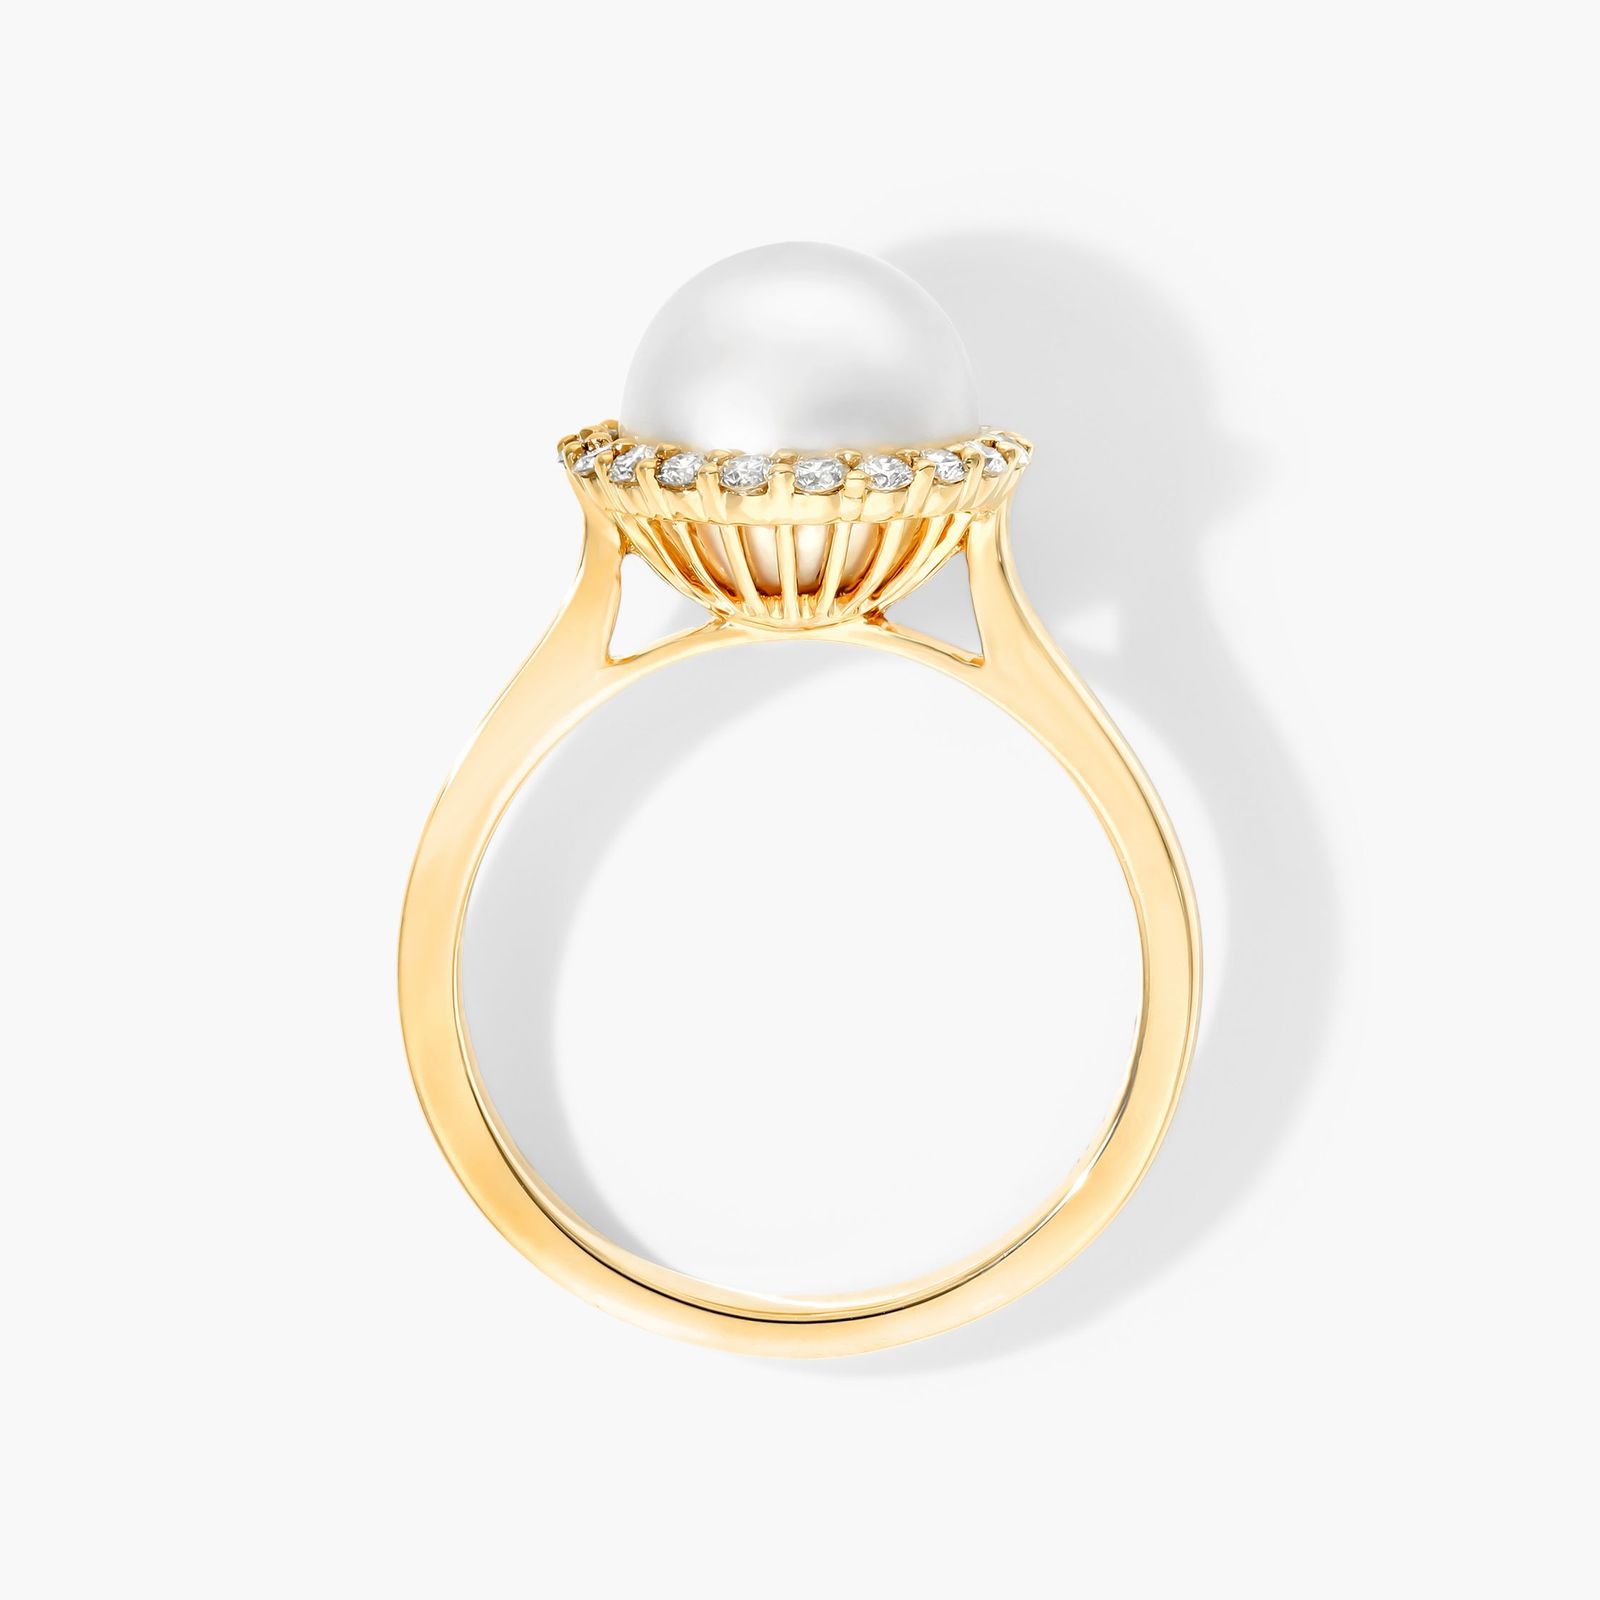 WDIYIEETN Elegant Pearl Rings Rose Gold CZ Crystal Fashion Engagement  Wedding Ring (6) | Amazon.com